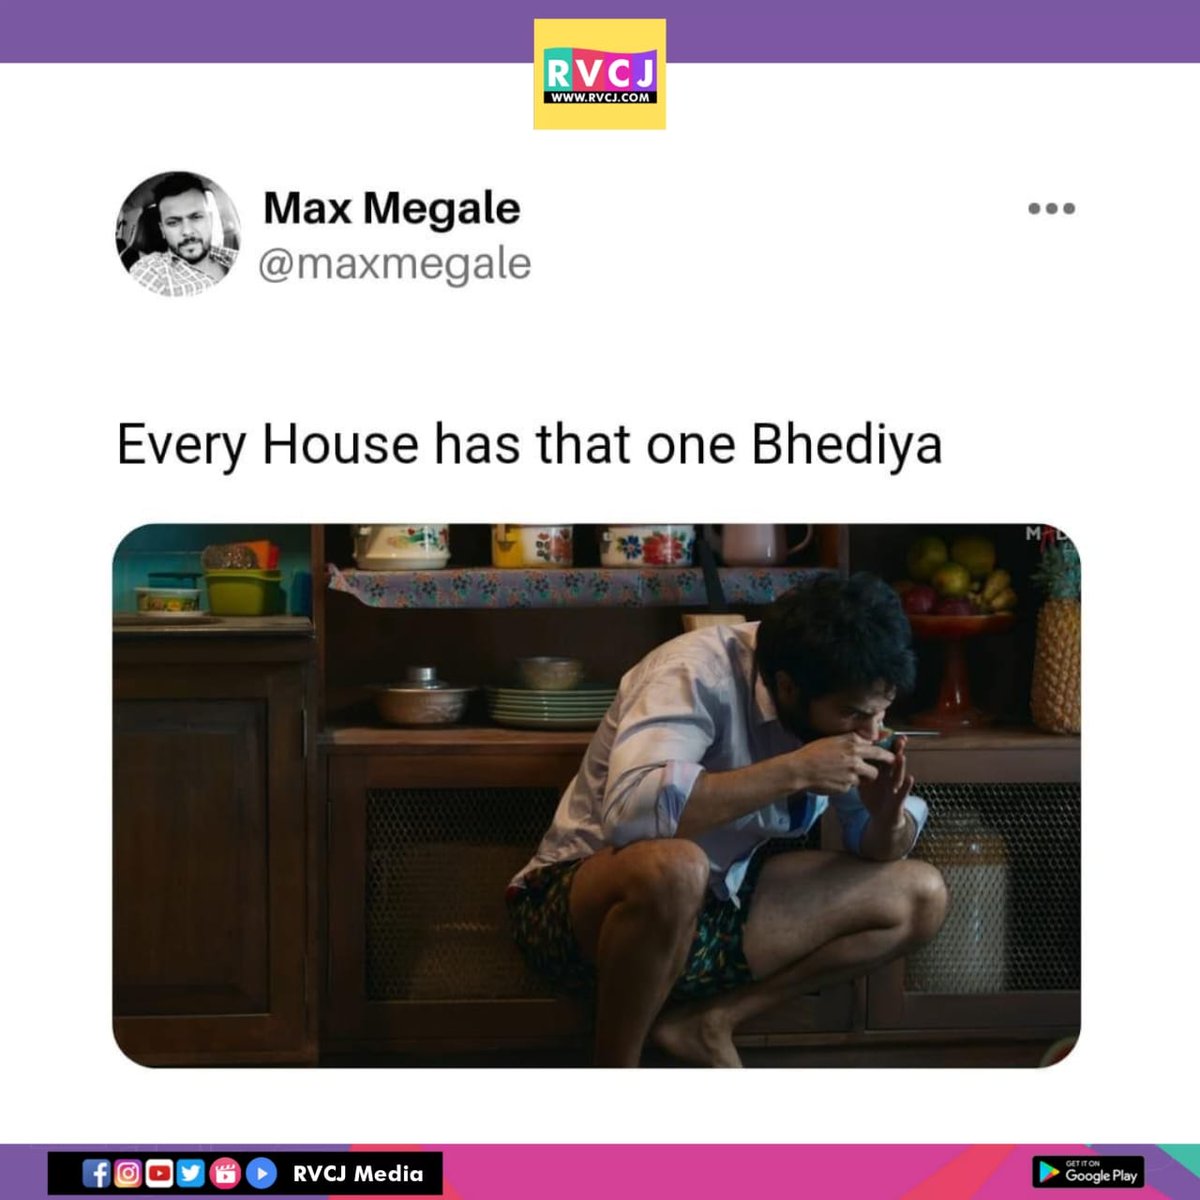 Tag that Bhediya of your house 😂😂
#bhediya & #BhediyaTrailer